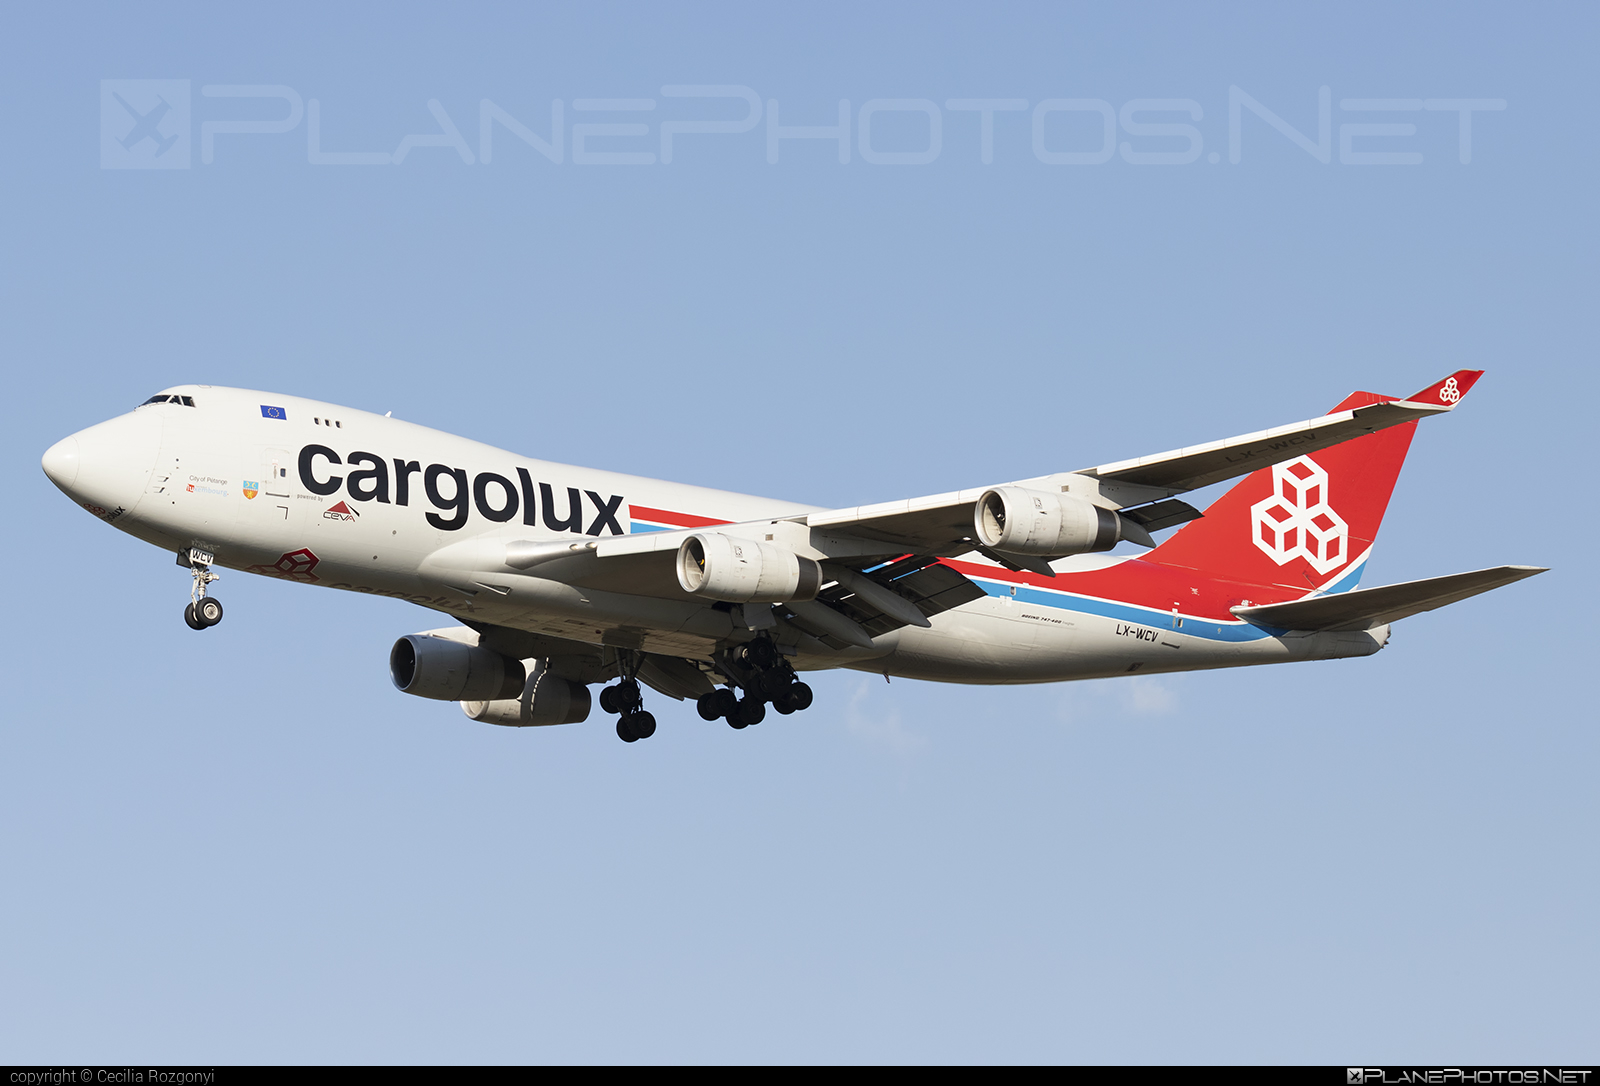 Boeing 747-400F - LX-WCV operated by Cargolux Airlines International #b747 #boeing #boeing747 #cargolux #jumbo